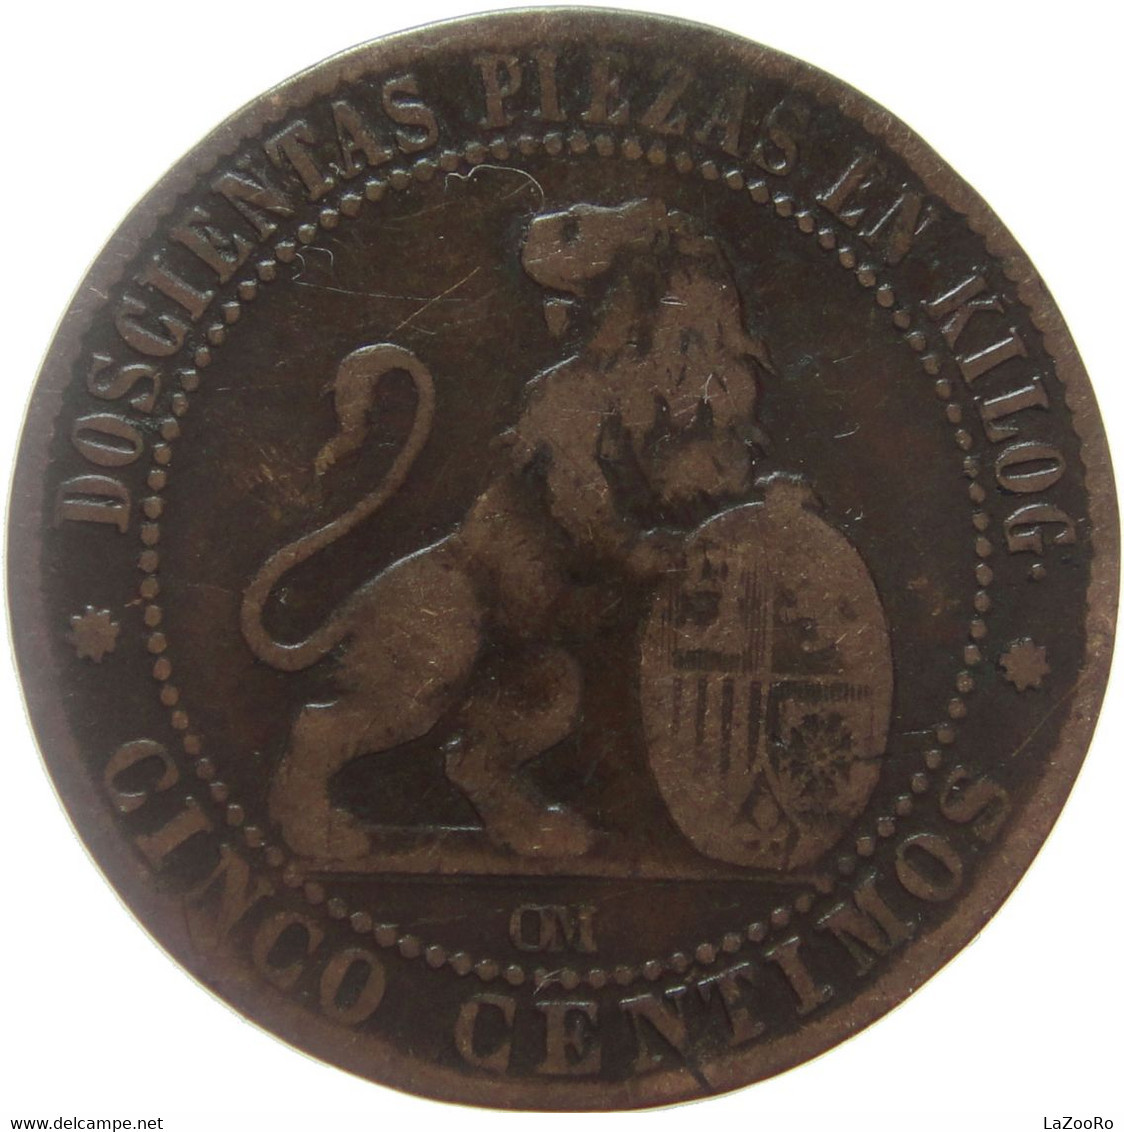 LaZooRo: Spain 5 Centimos 1870 OM VF - First Minting